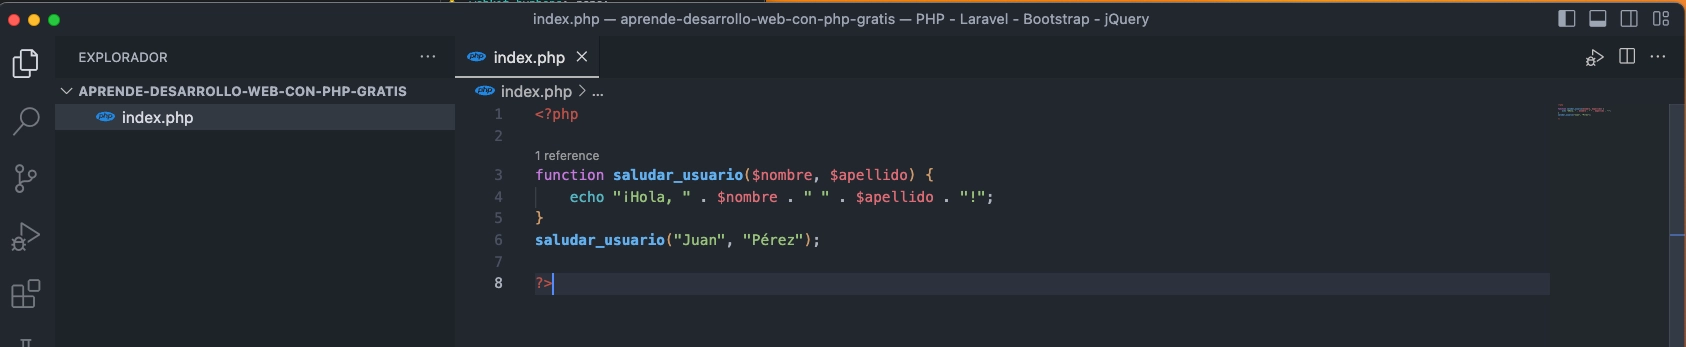 Pasar parámetros a una Función en PHP Código